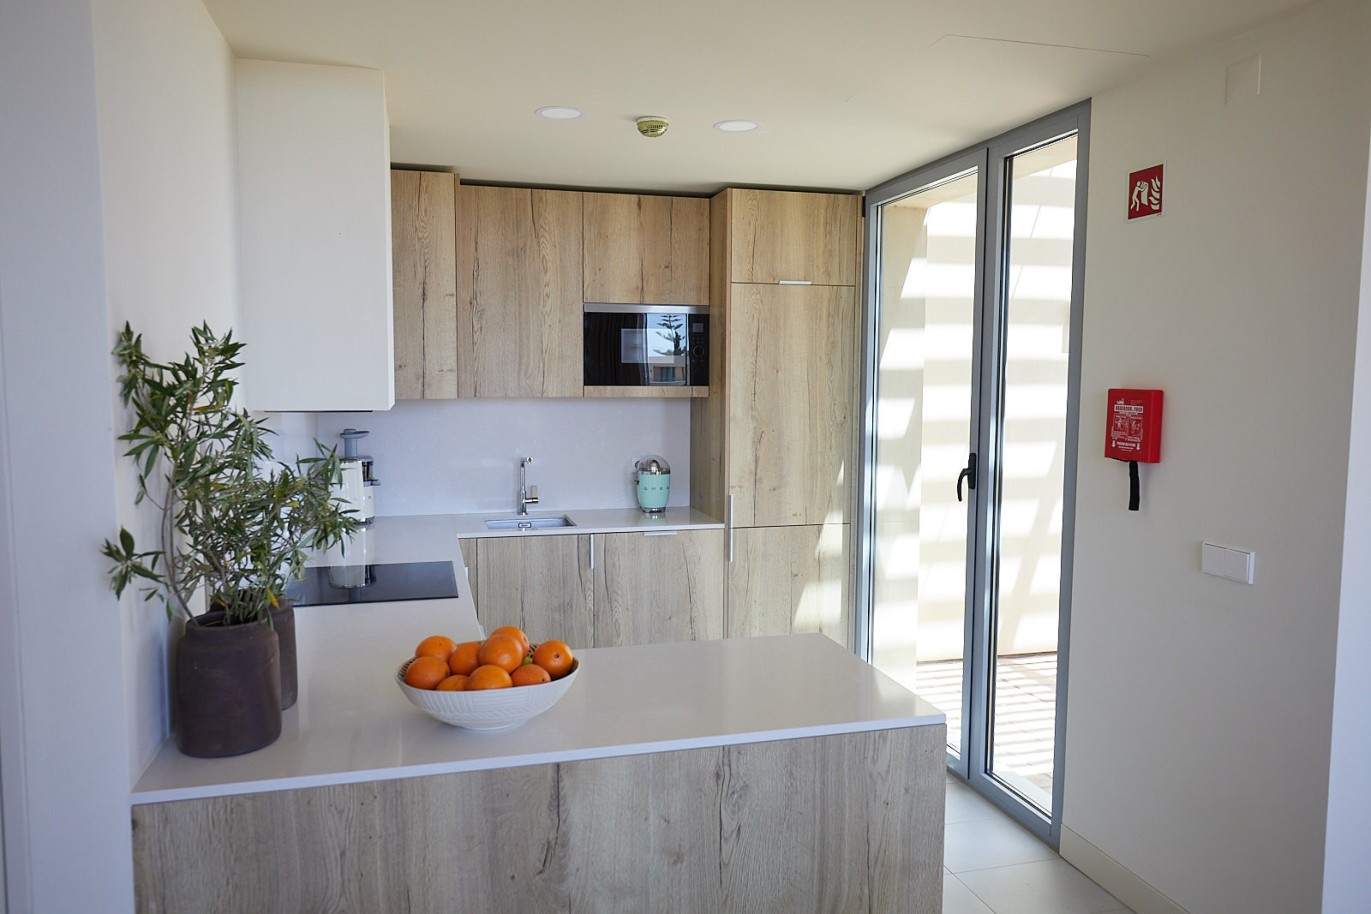 2 bedroom apartment in resort, for sale in Porches, Algarve_228957